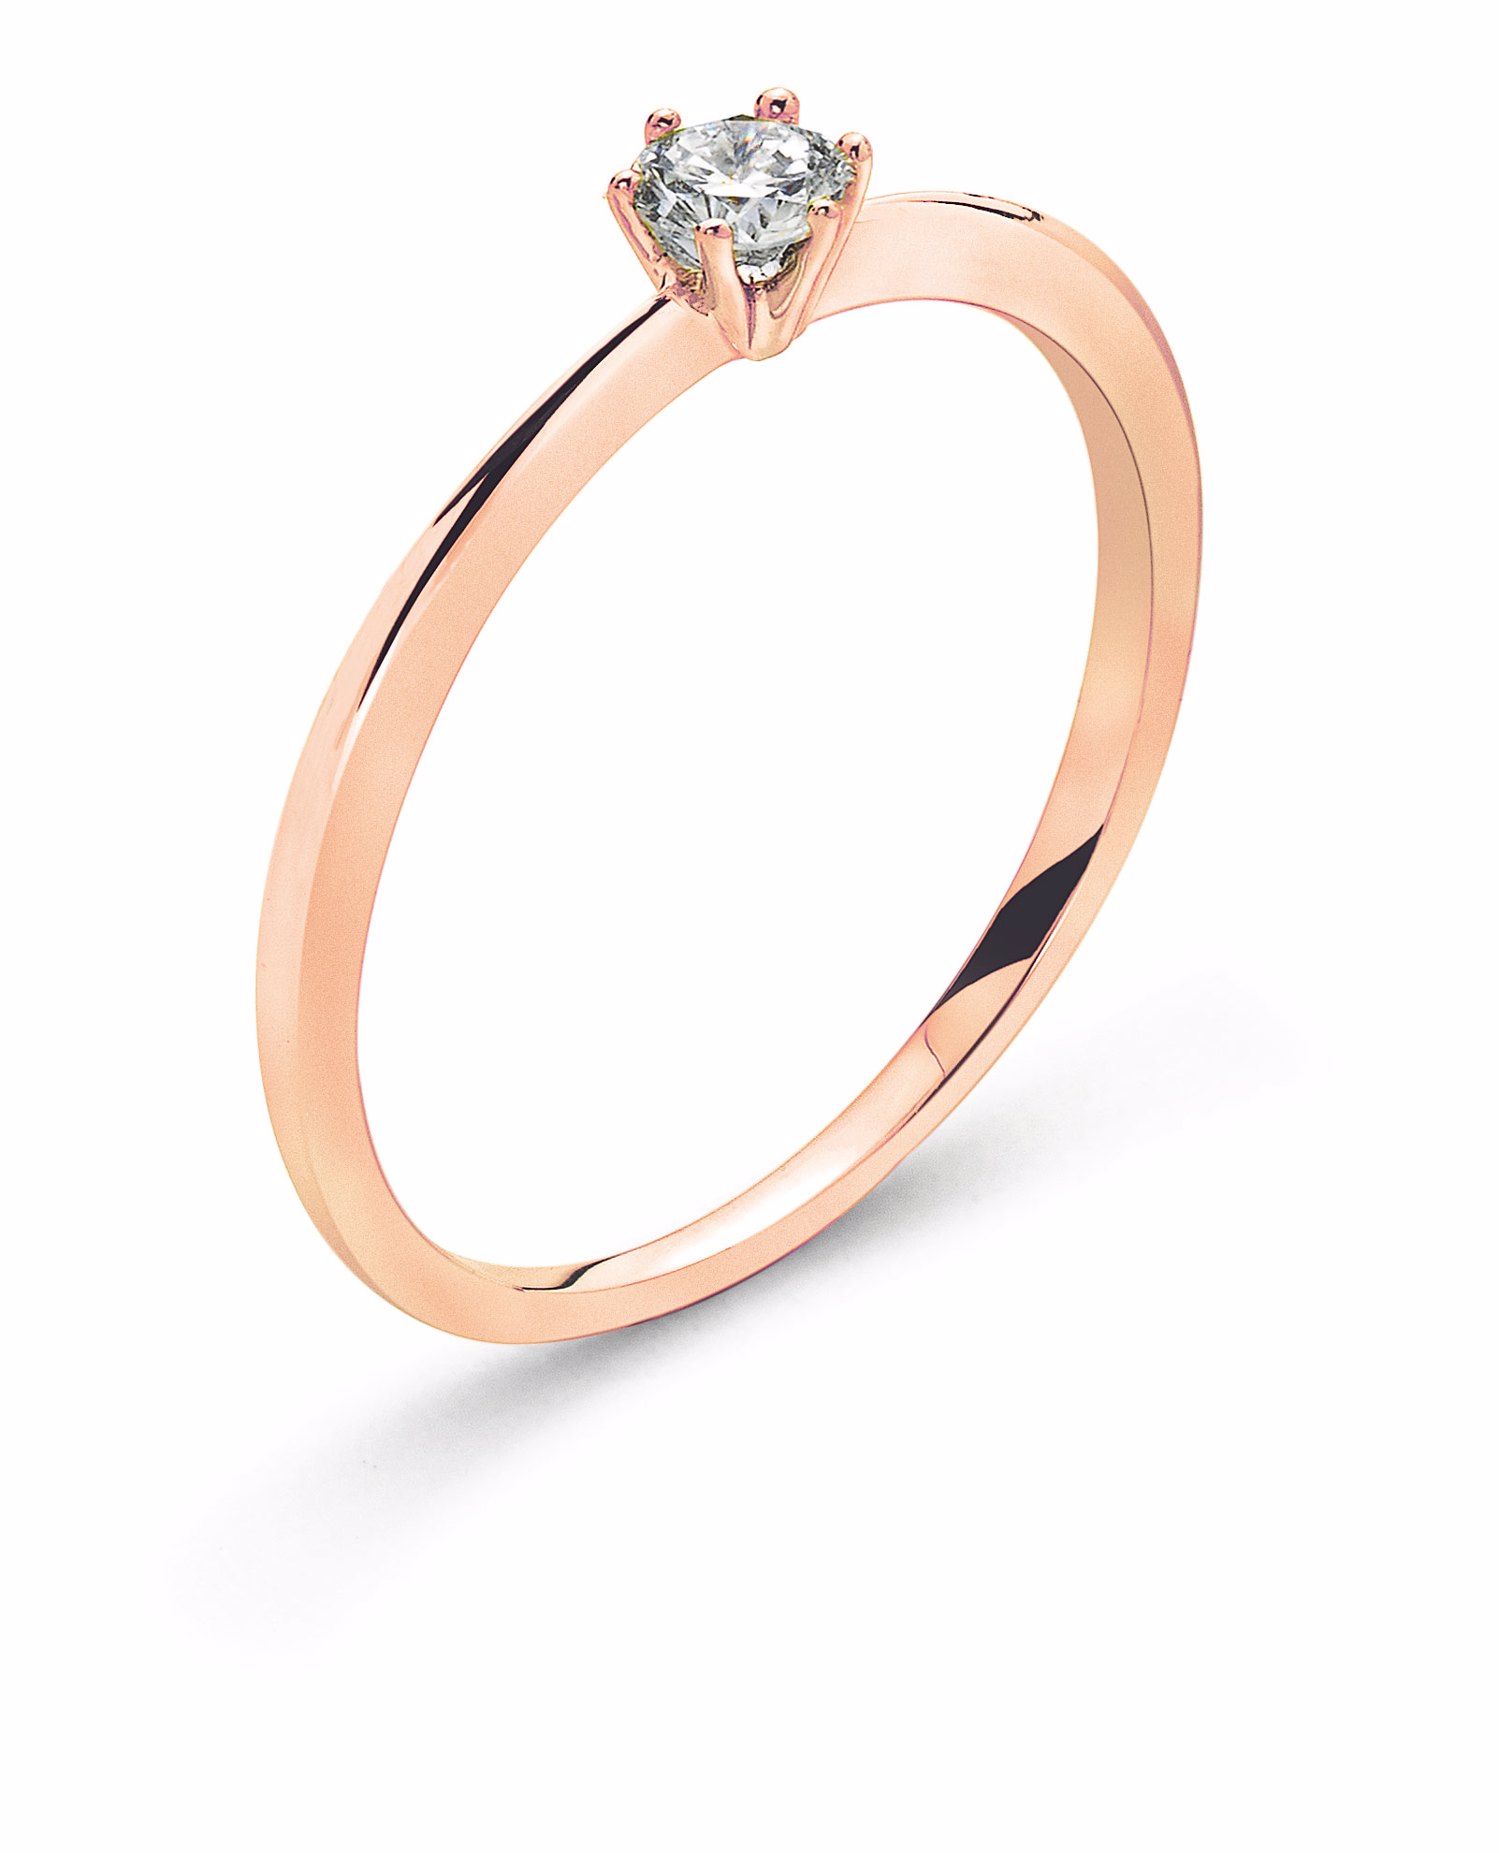 AURONOS Prestige Solitär Ring Roségold 18K Diamant 0.15ct